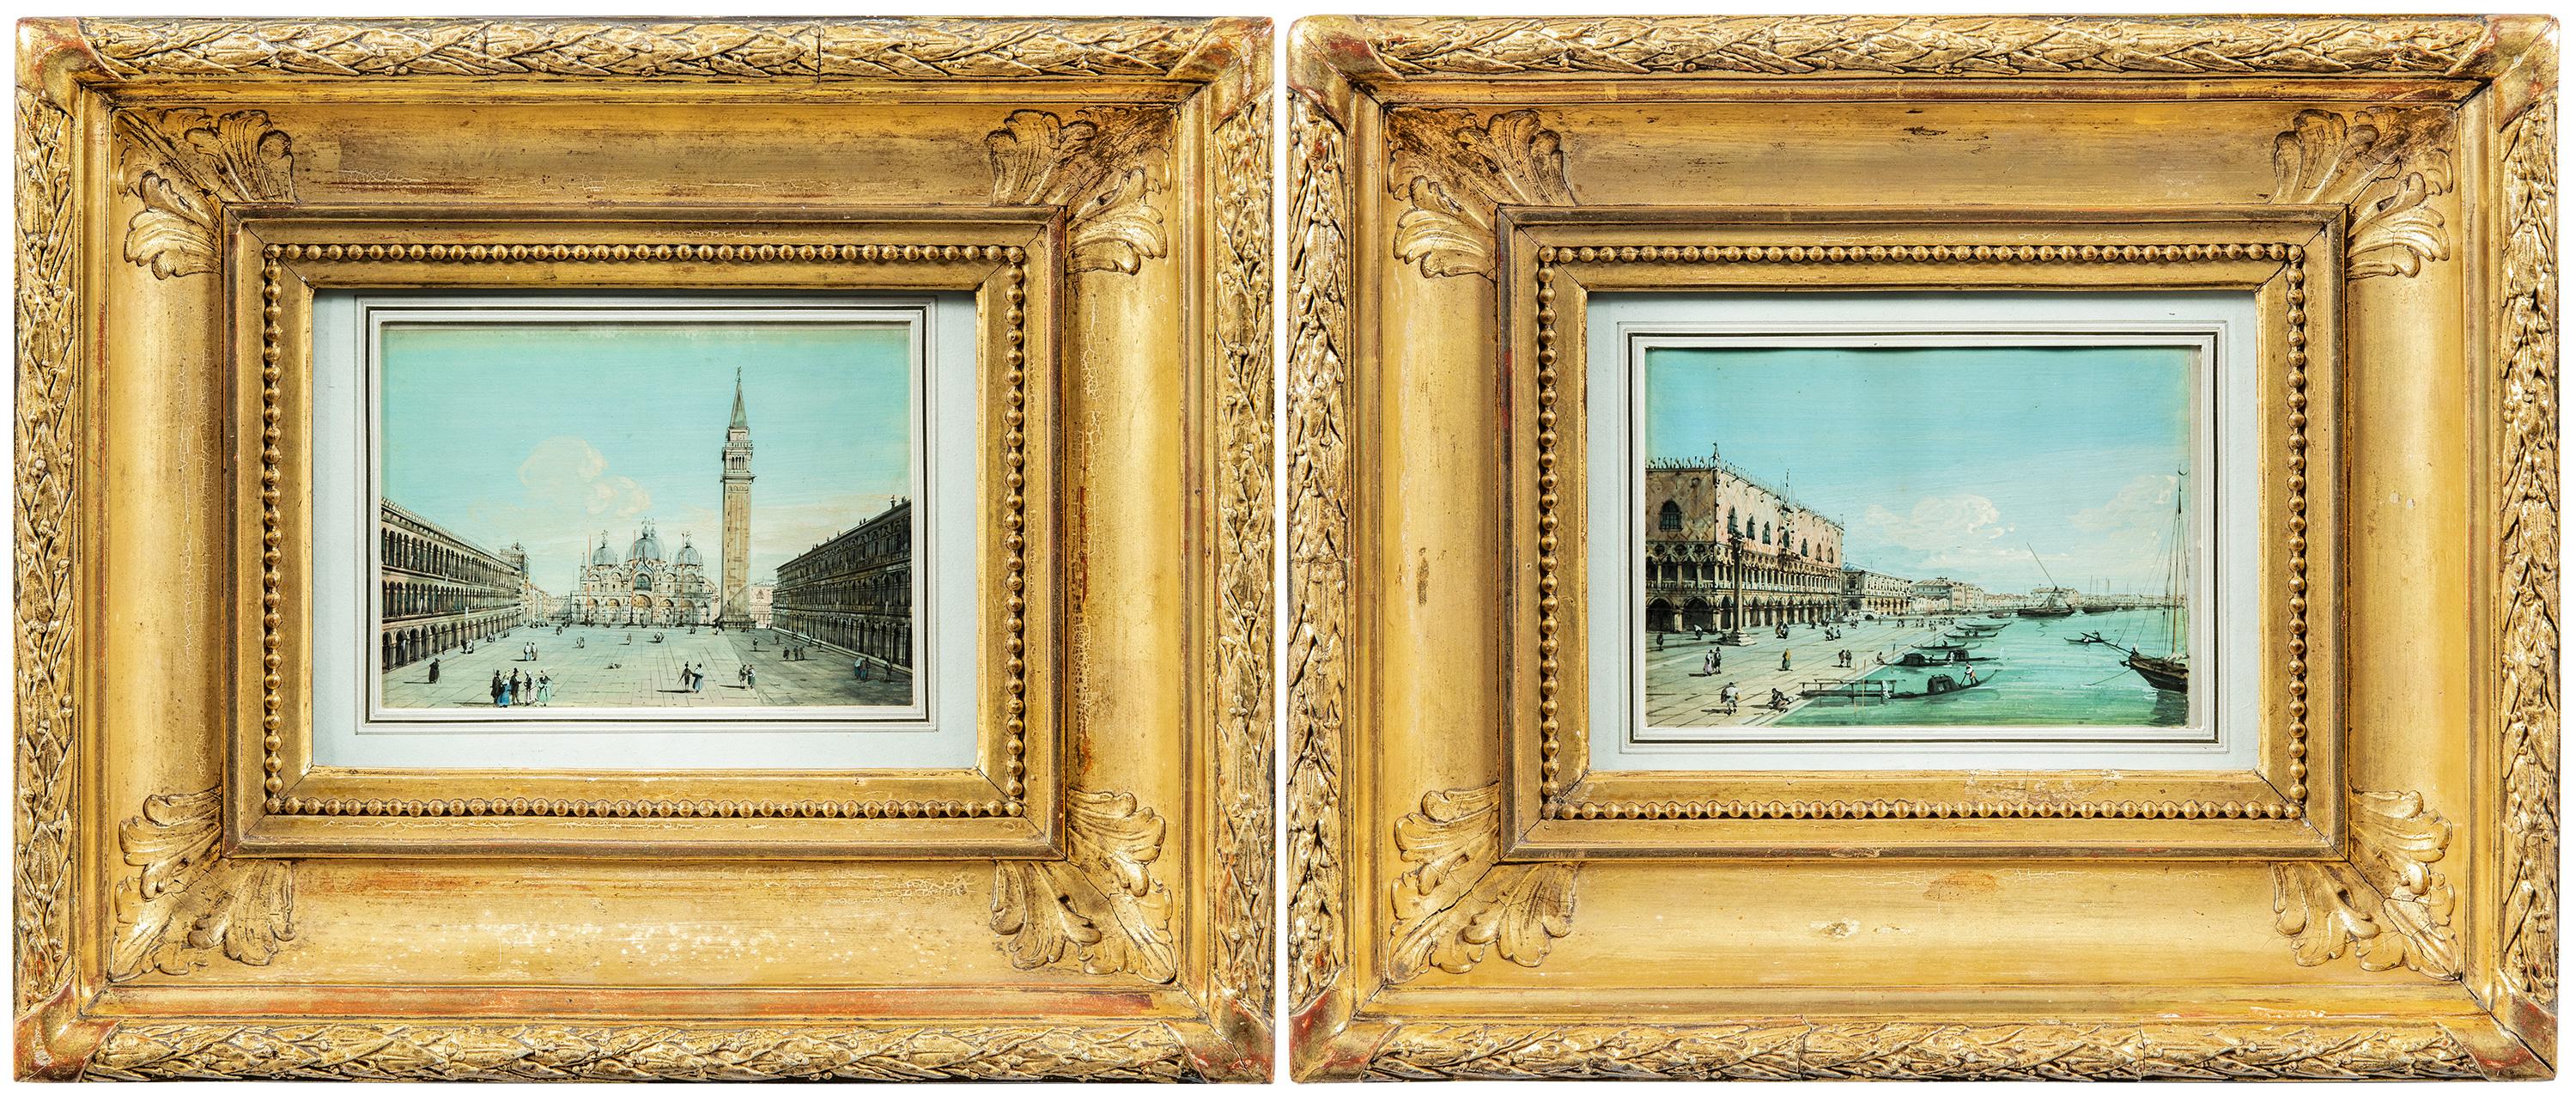 Carlo Grubacs(Venetian master)- Pair of 19th century Venice landscape paintings